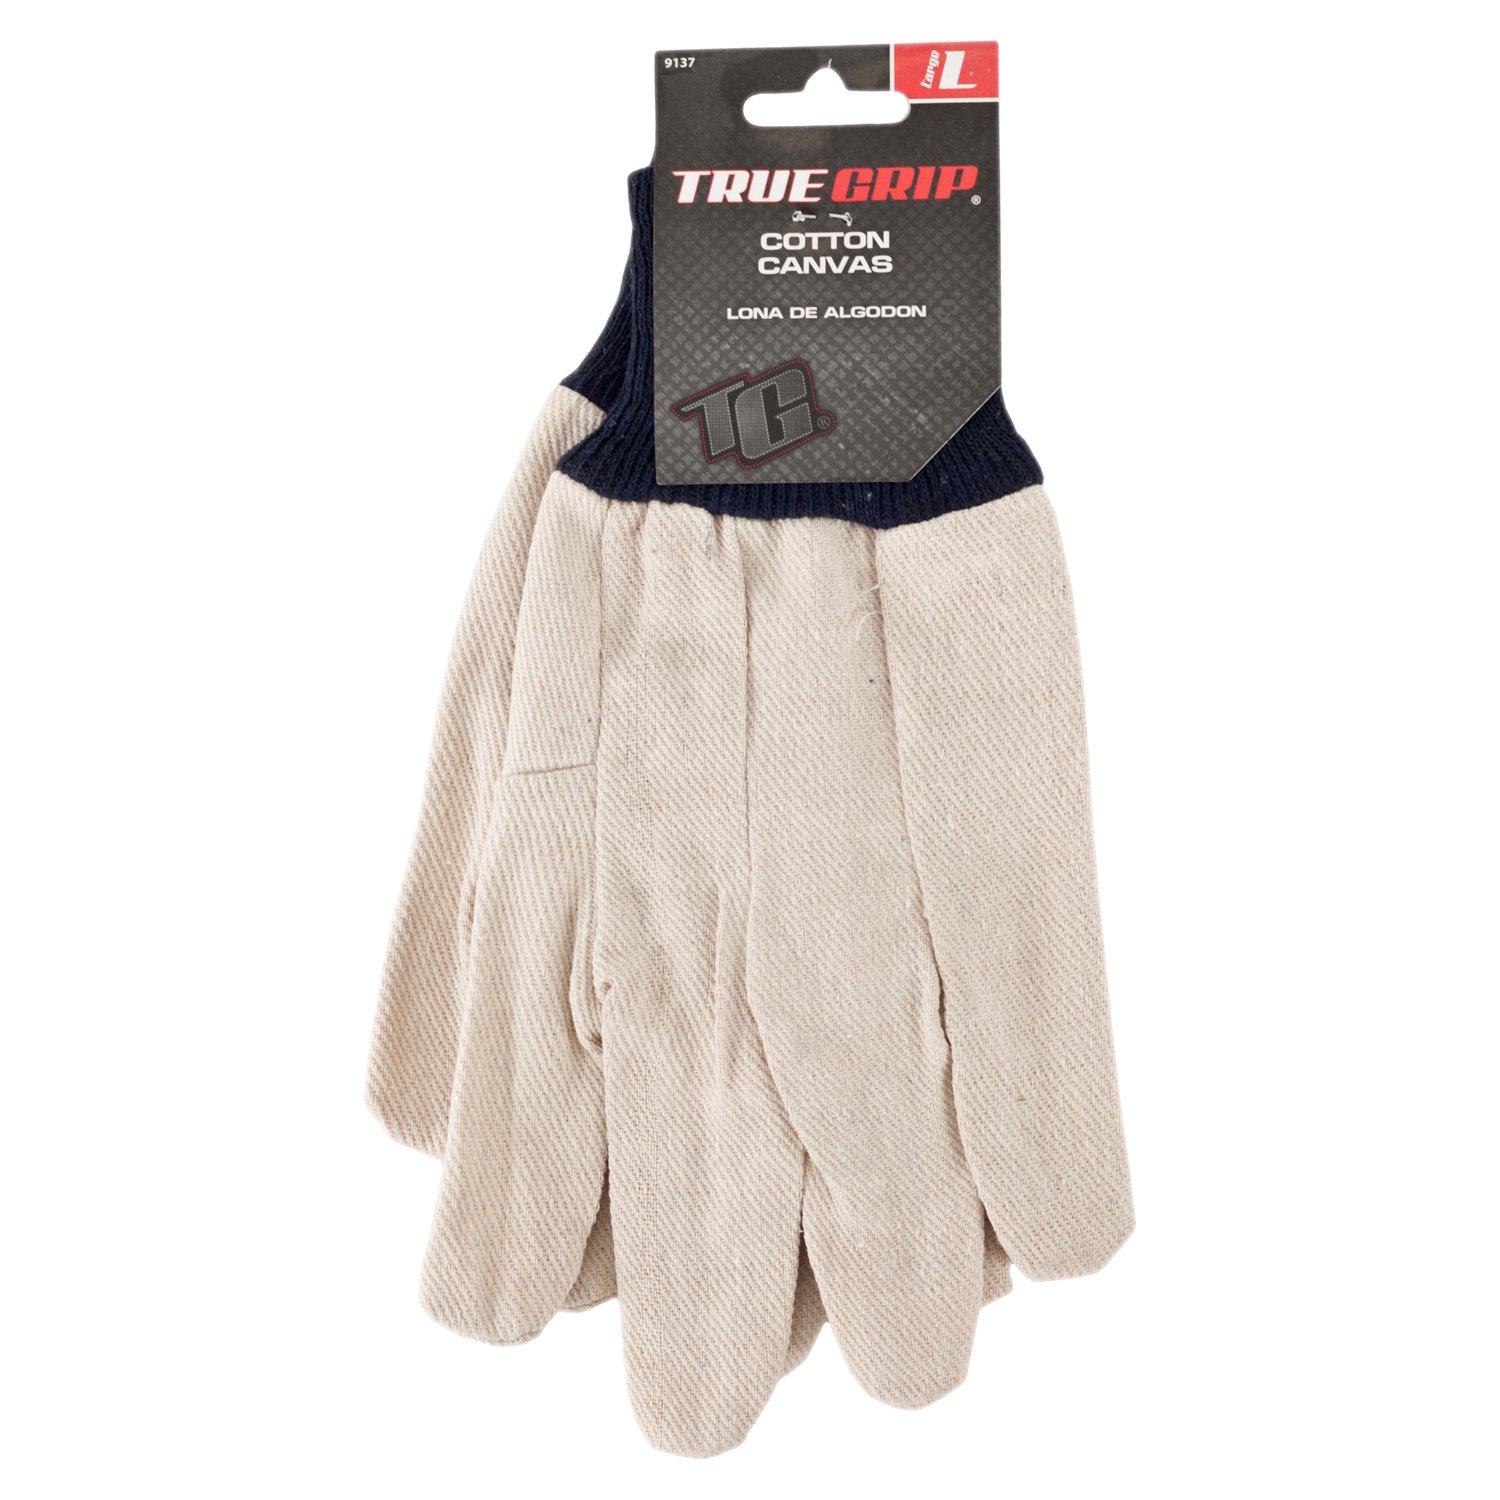 True Grip Cotton Canvas Gloves Large